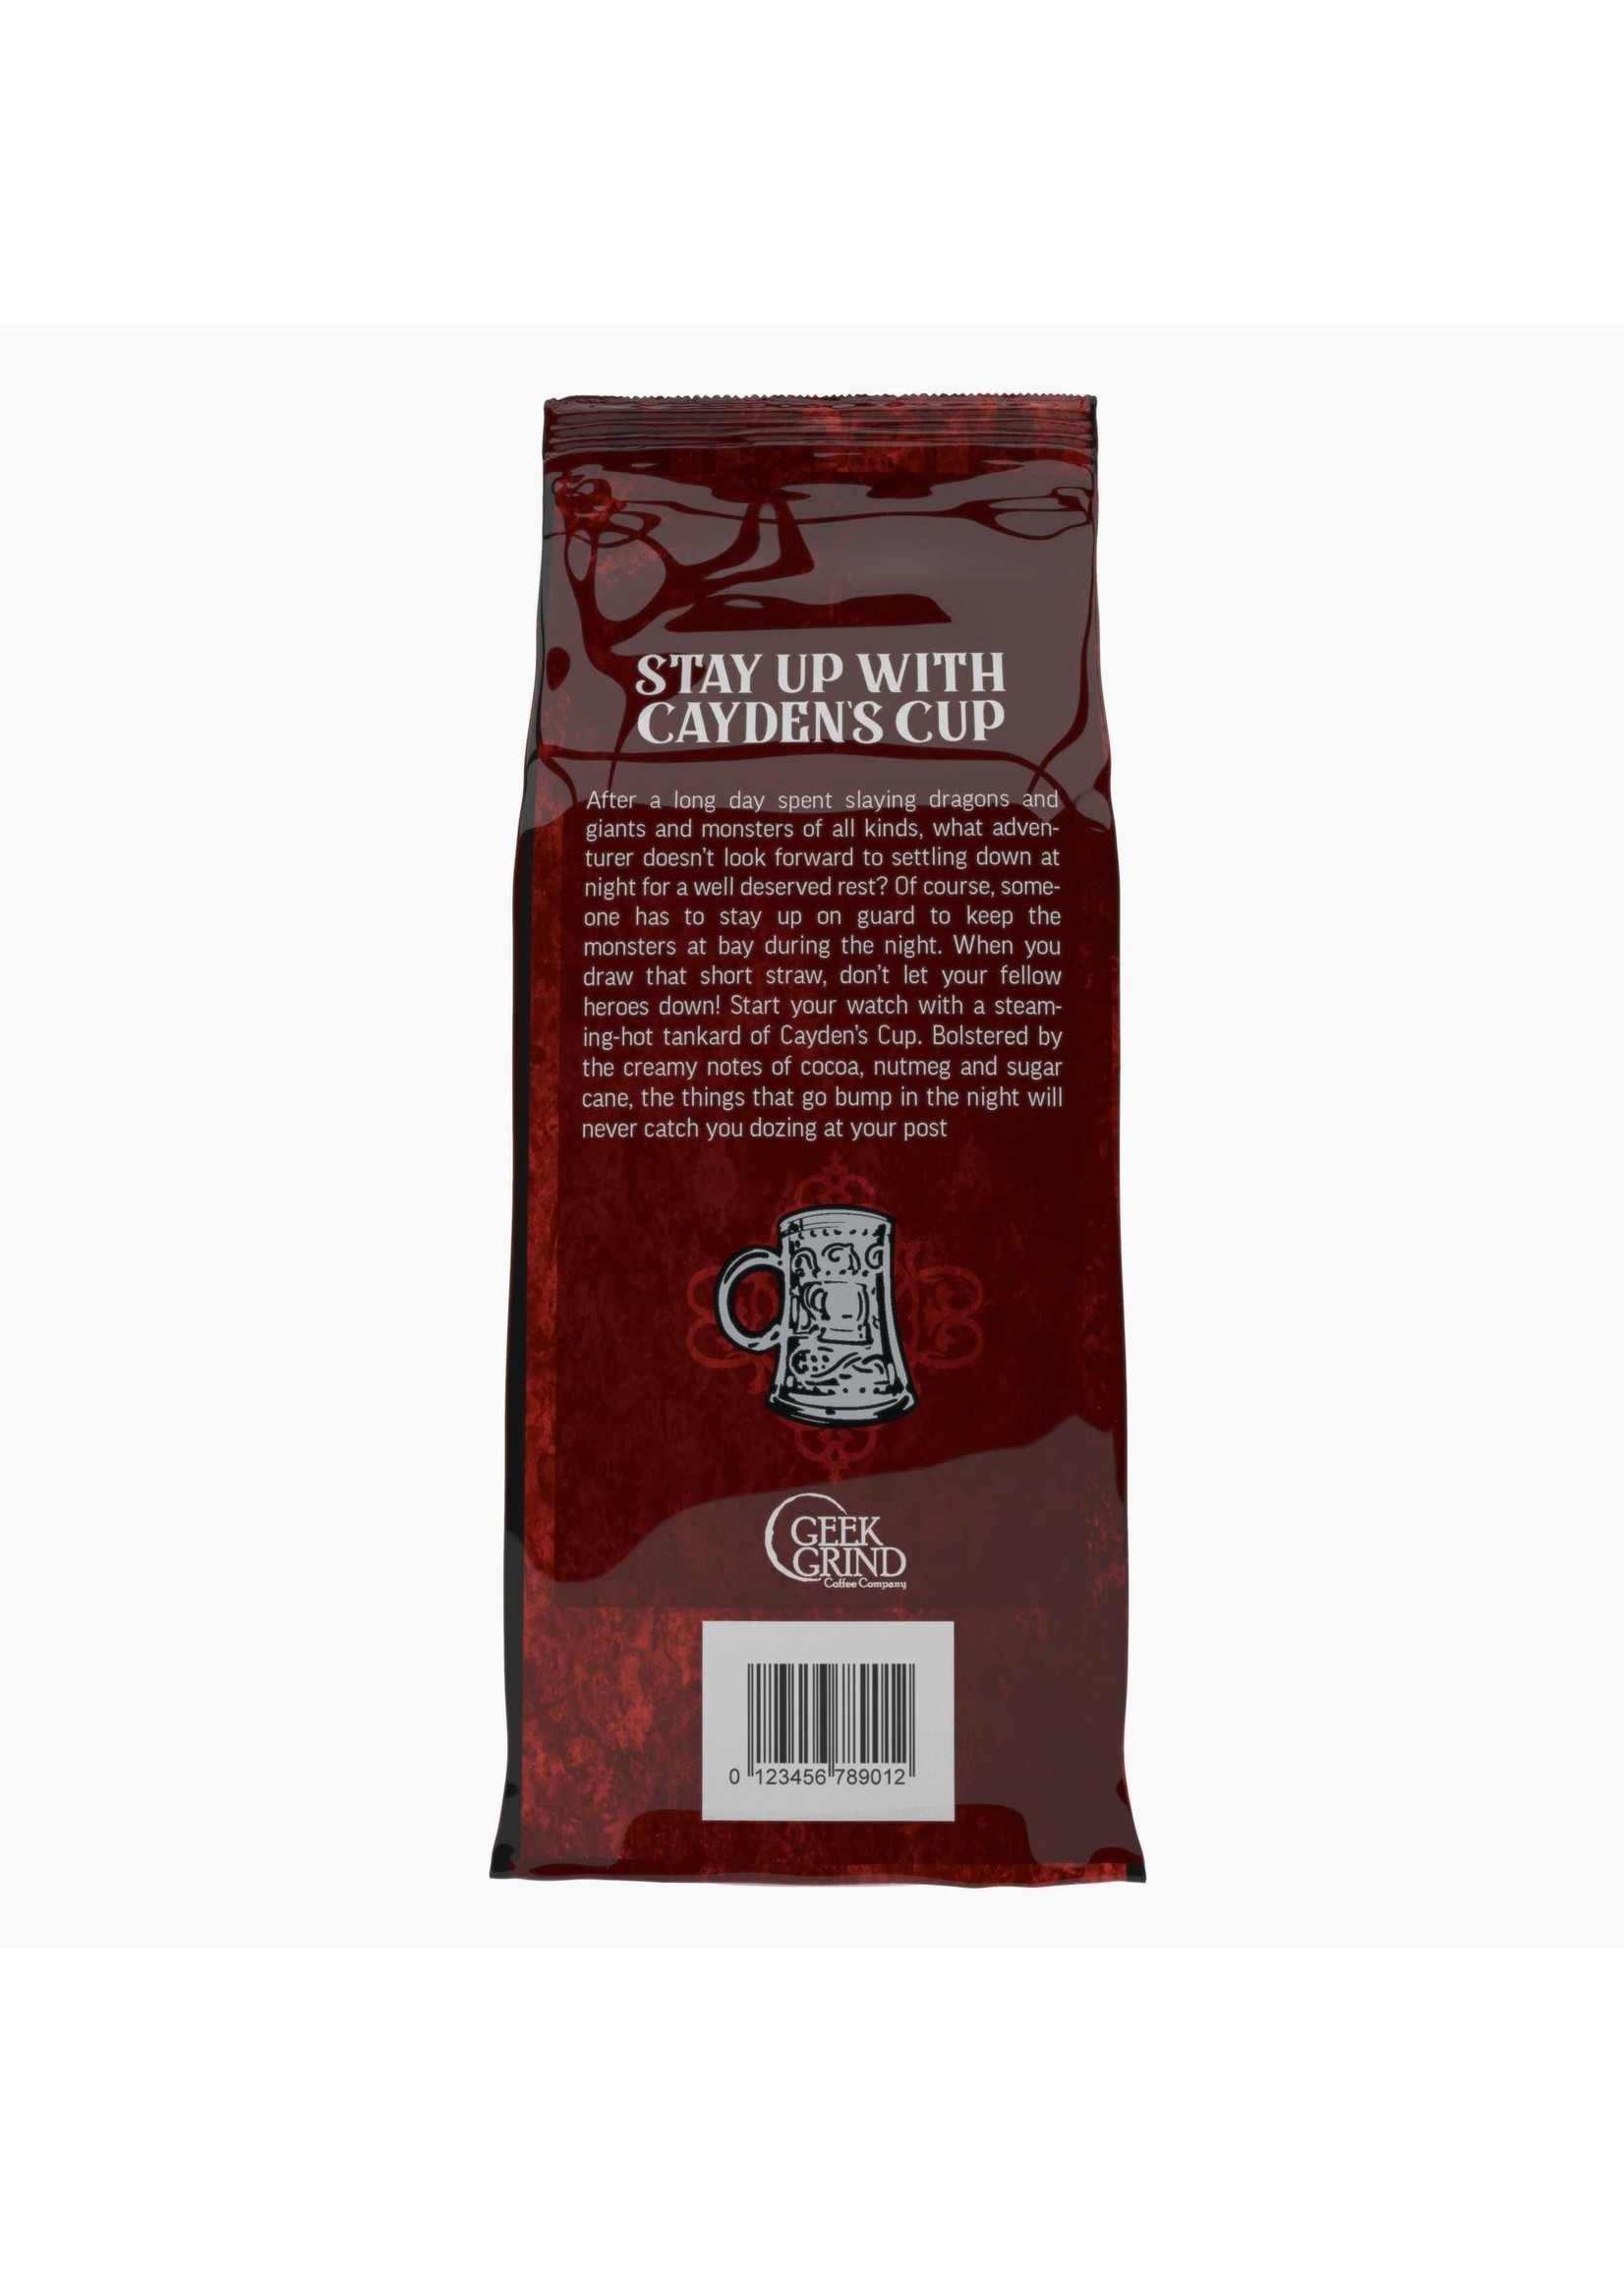 Geek Grind Cayden's Cup Coffee from Pathfinder - Medium-Dark Roast Coffee - 12oz.